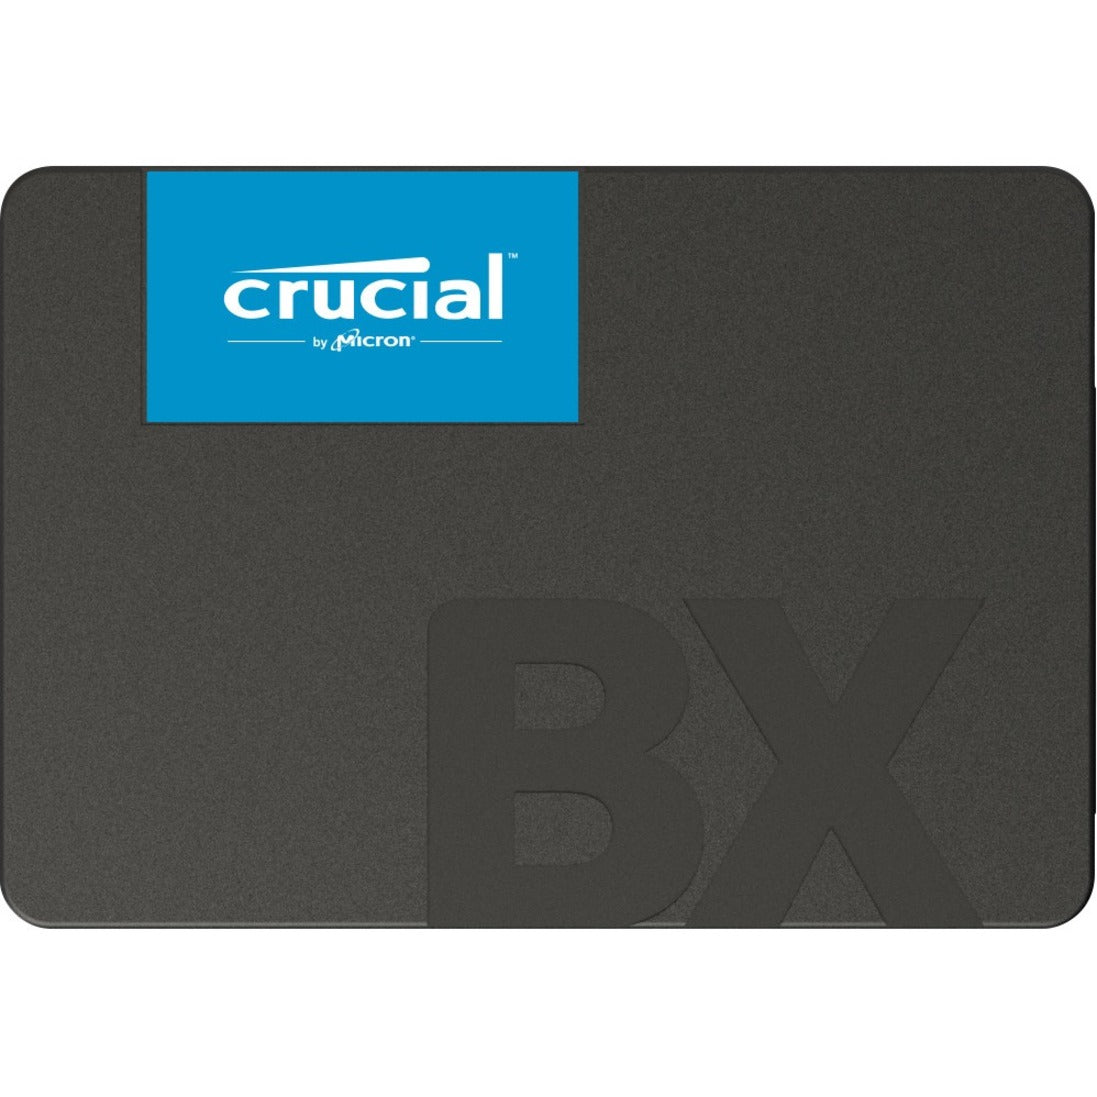 Crucial CT500BX500SSD1 BX500 500GB 3D NAND SATA 2.5-inch SSD, 120 TBW, 550 MB/s Read, 500 MB/s Write